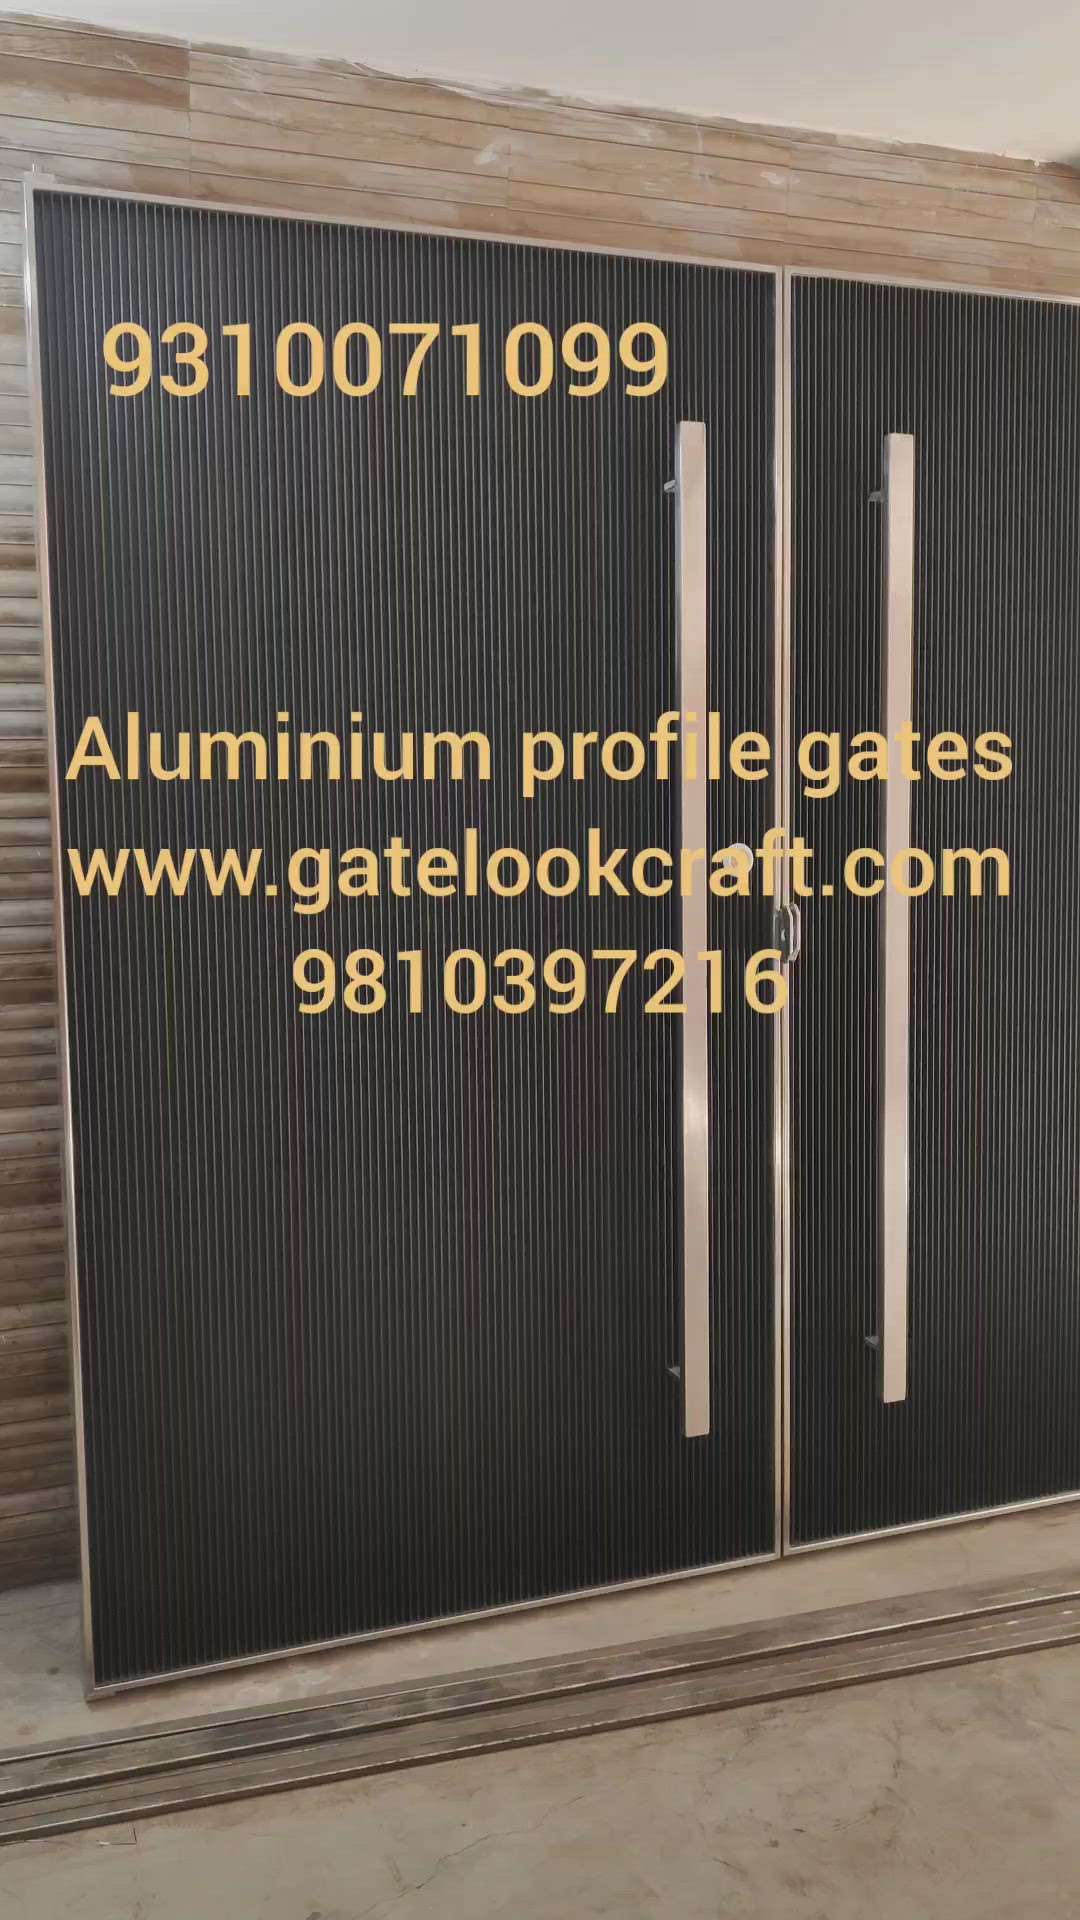 Aluminium profile gates by Hibza sterling interiors pvt ltd manufacture in Delhi Gurgaon Noida faridabad ghaziabad Soni pat bhadur gadh all india #gatelookcraft #aluminiumprofilegate #aluminiumpanelgates #Aotumationgates #slidinggates #maingates #modulargate #gatesdesigns #fancygates